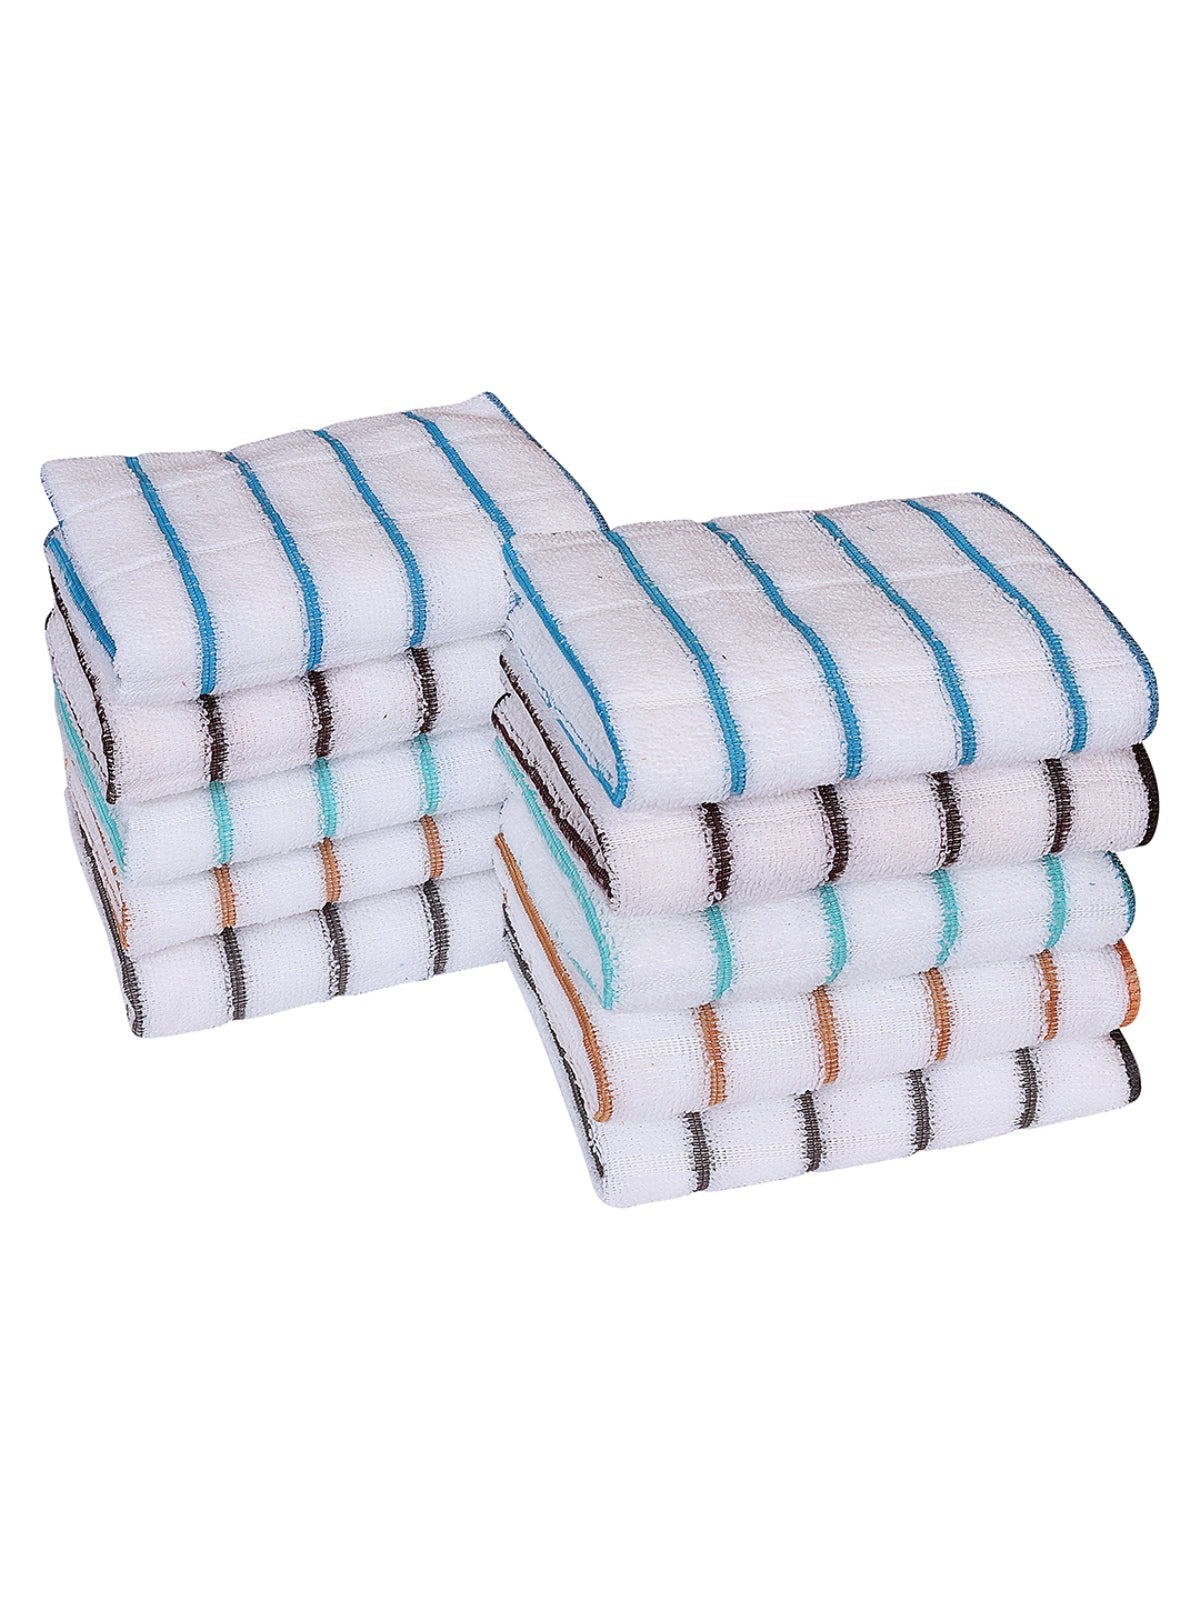 Set of 10 Multicolor Stripes Cotton Hand Towels